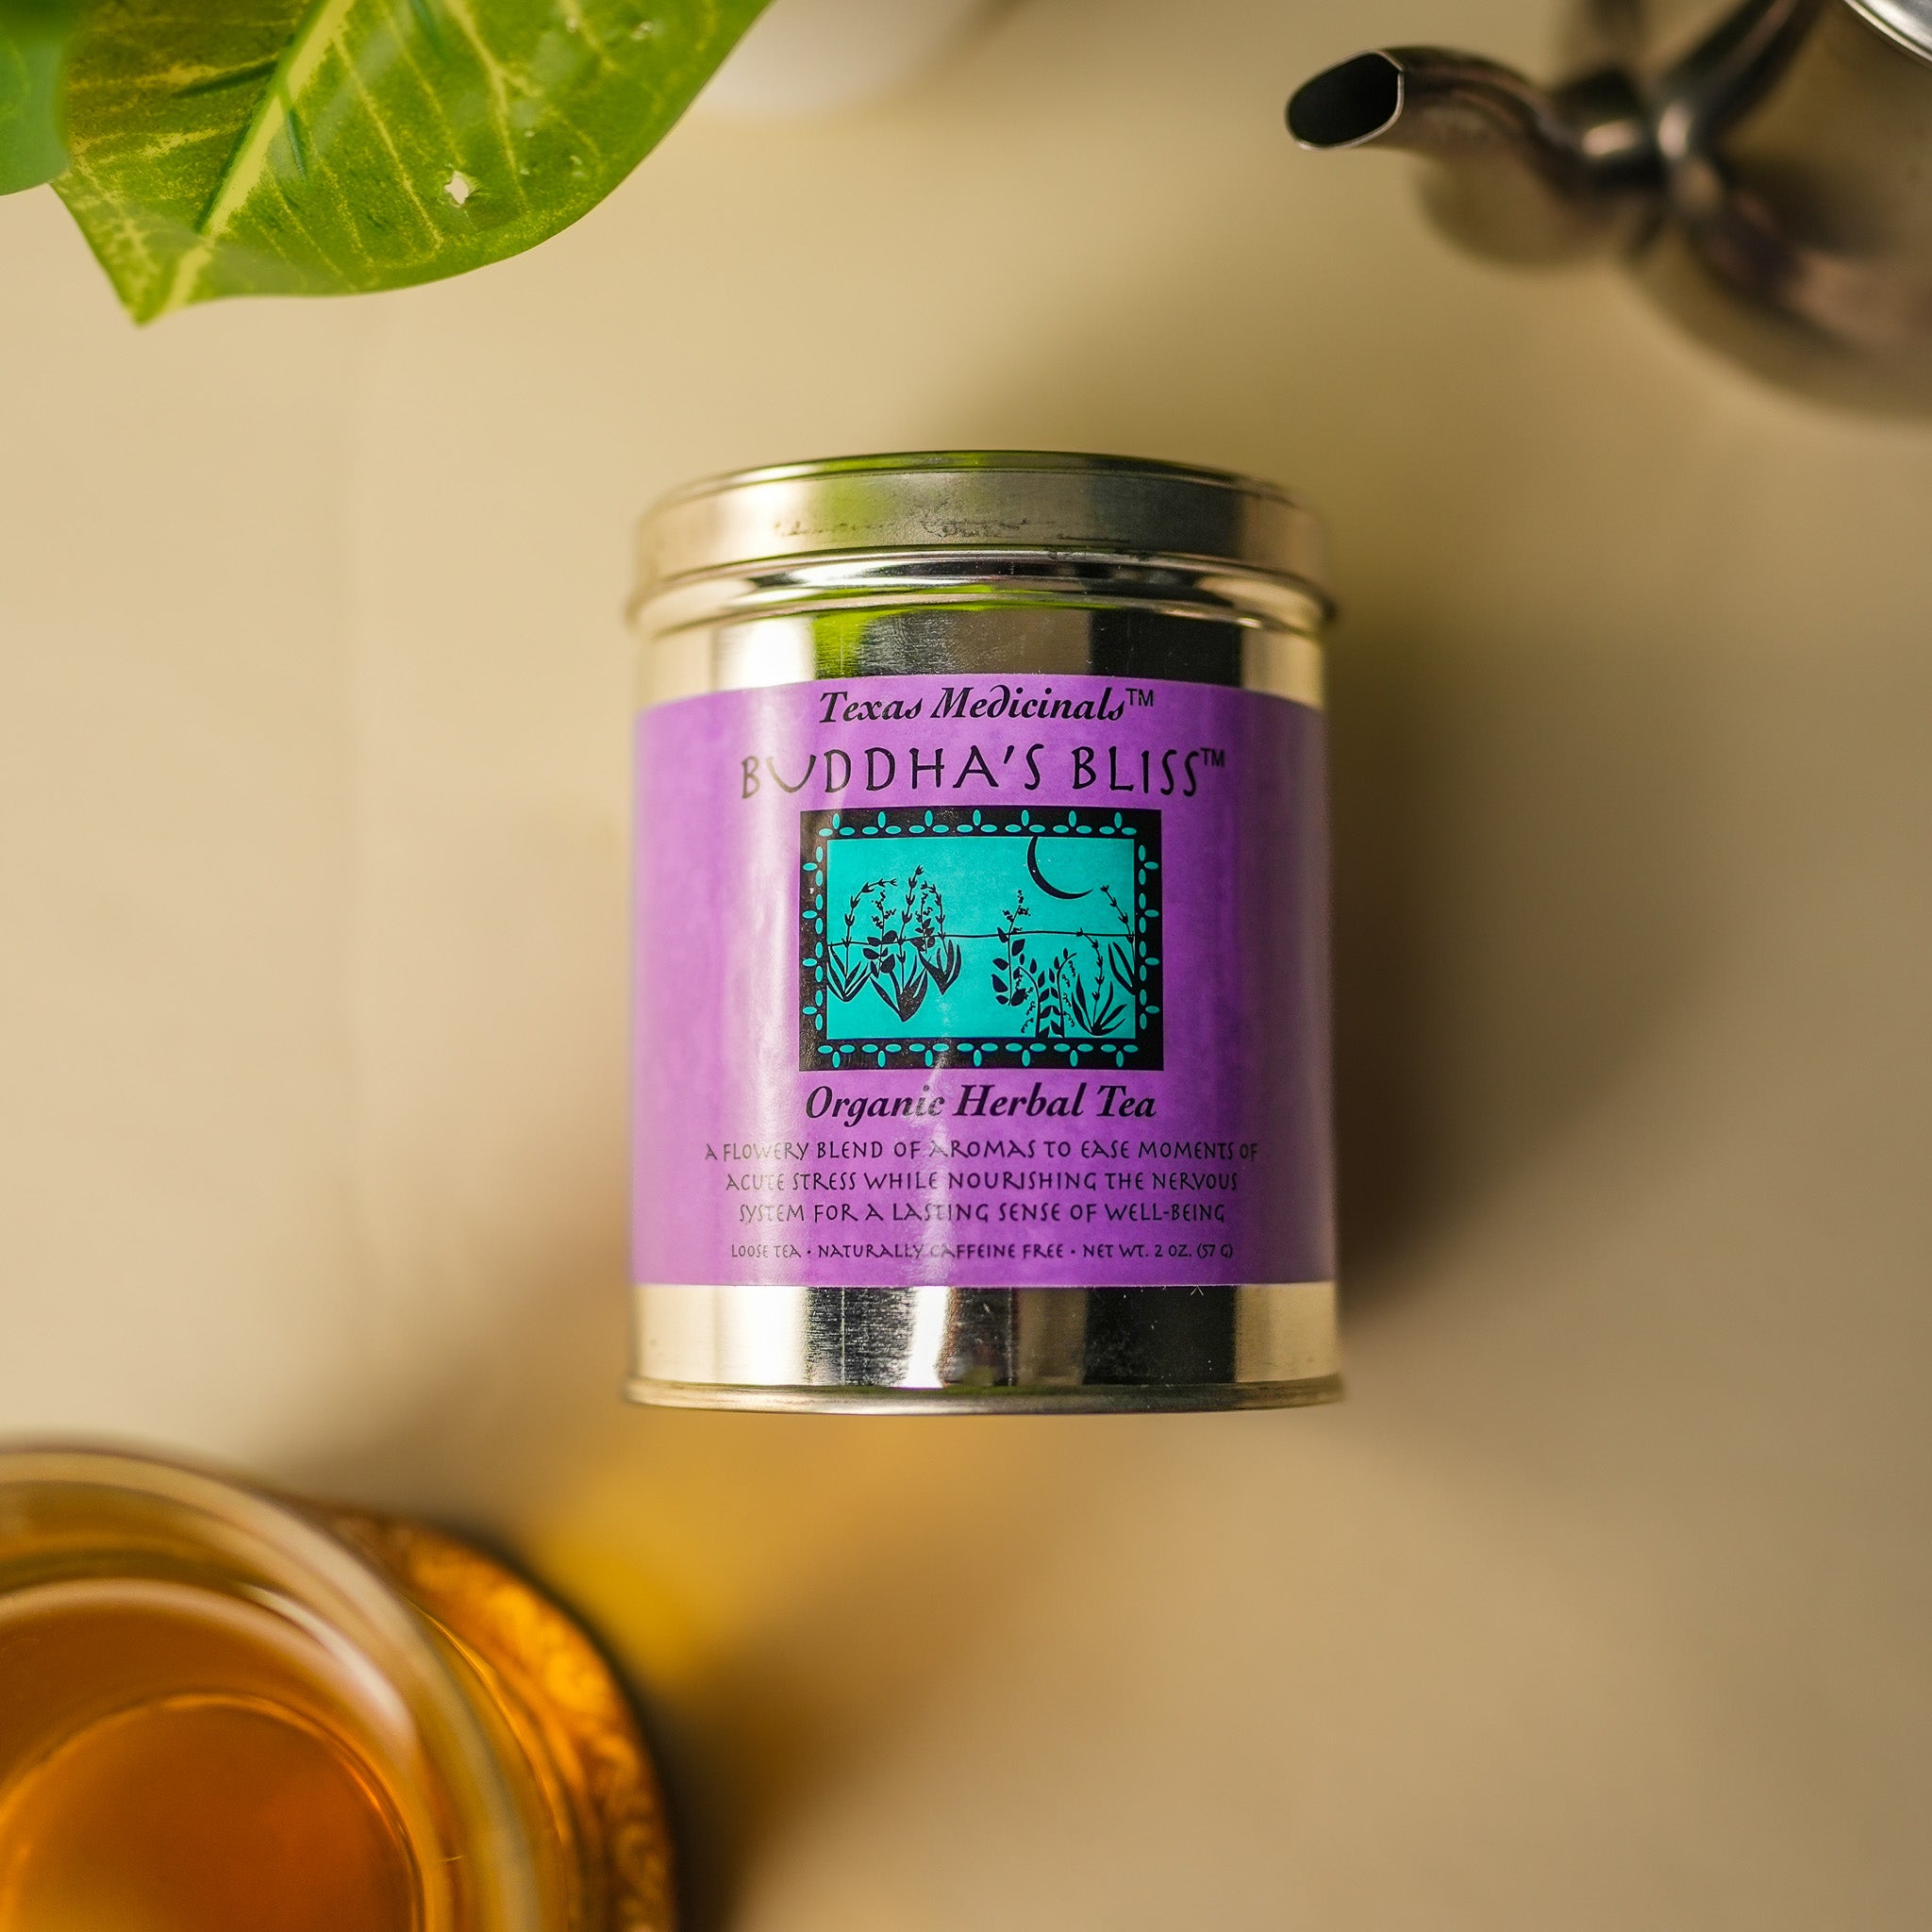 Buddha's Bliss Organic Herbal Tea